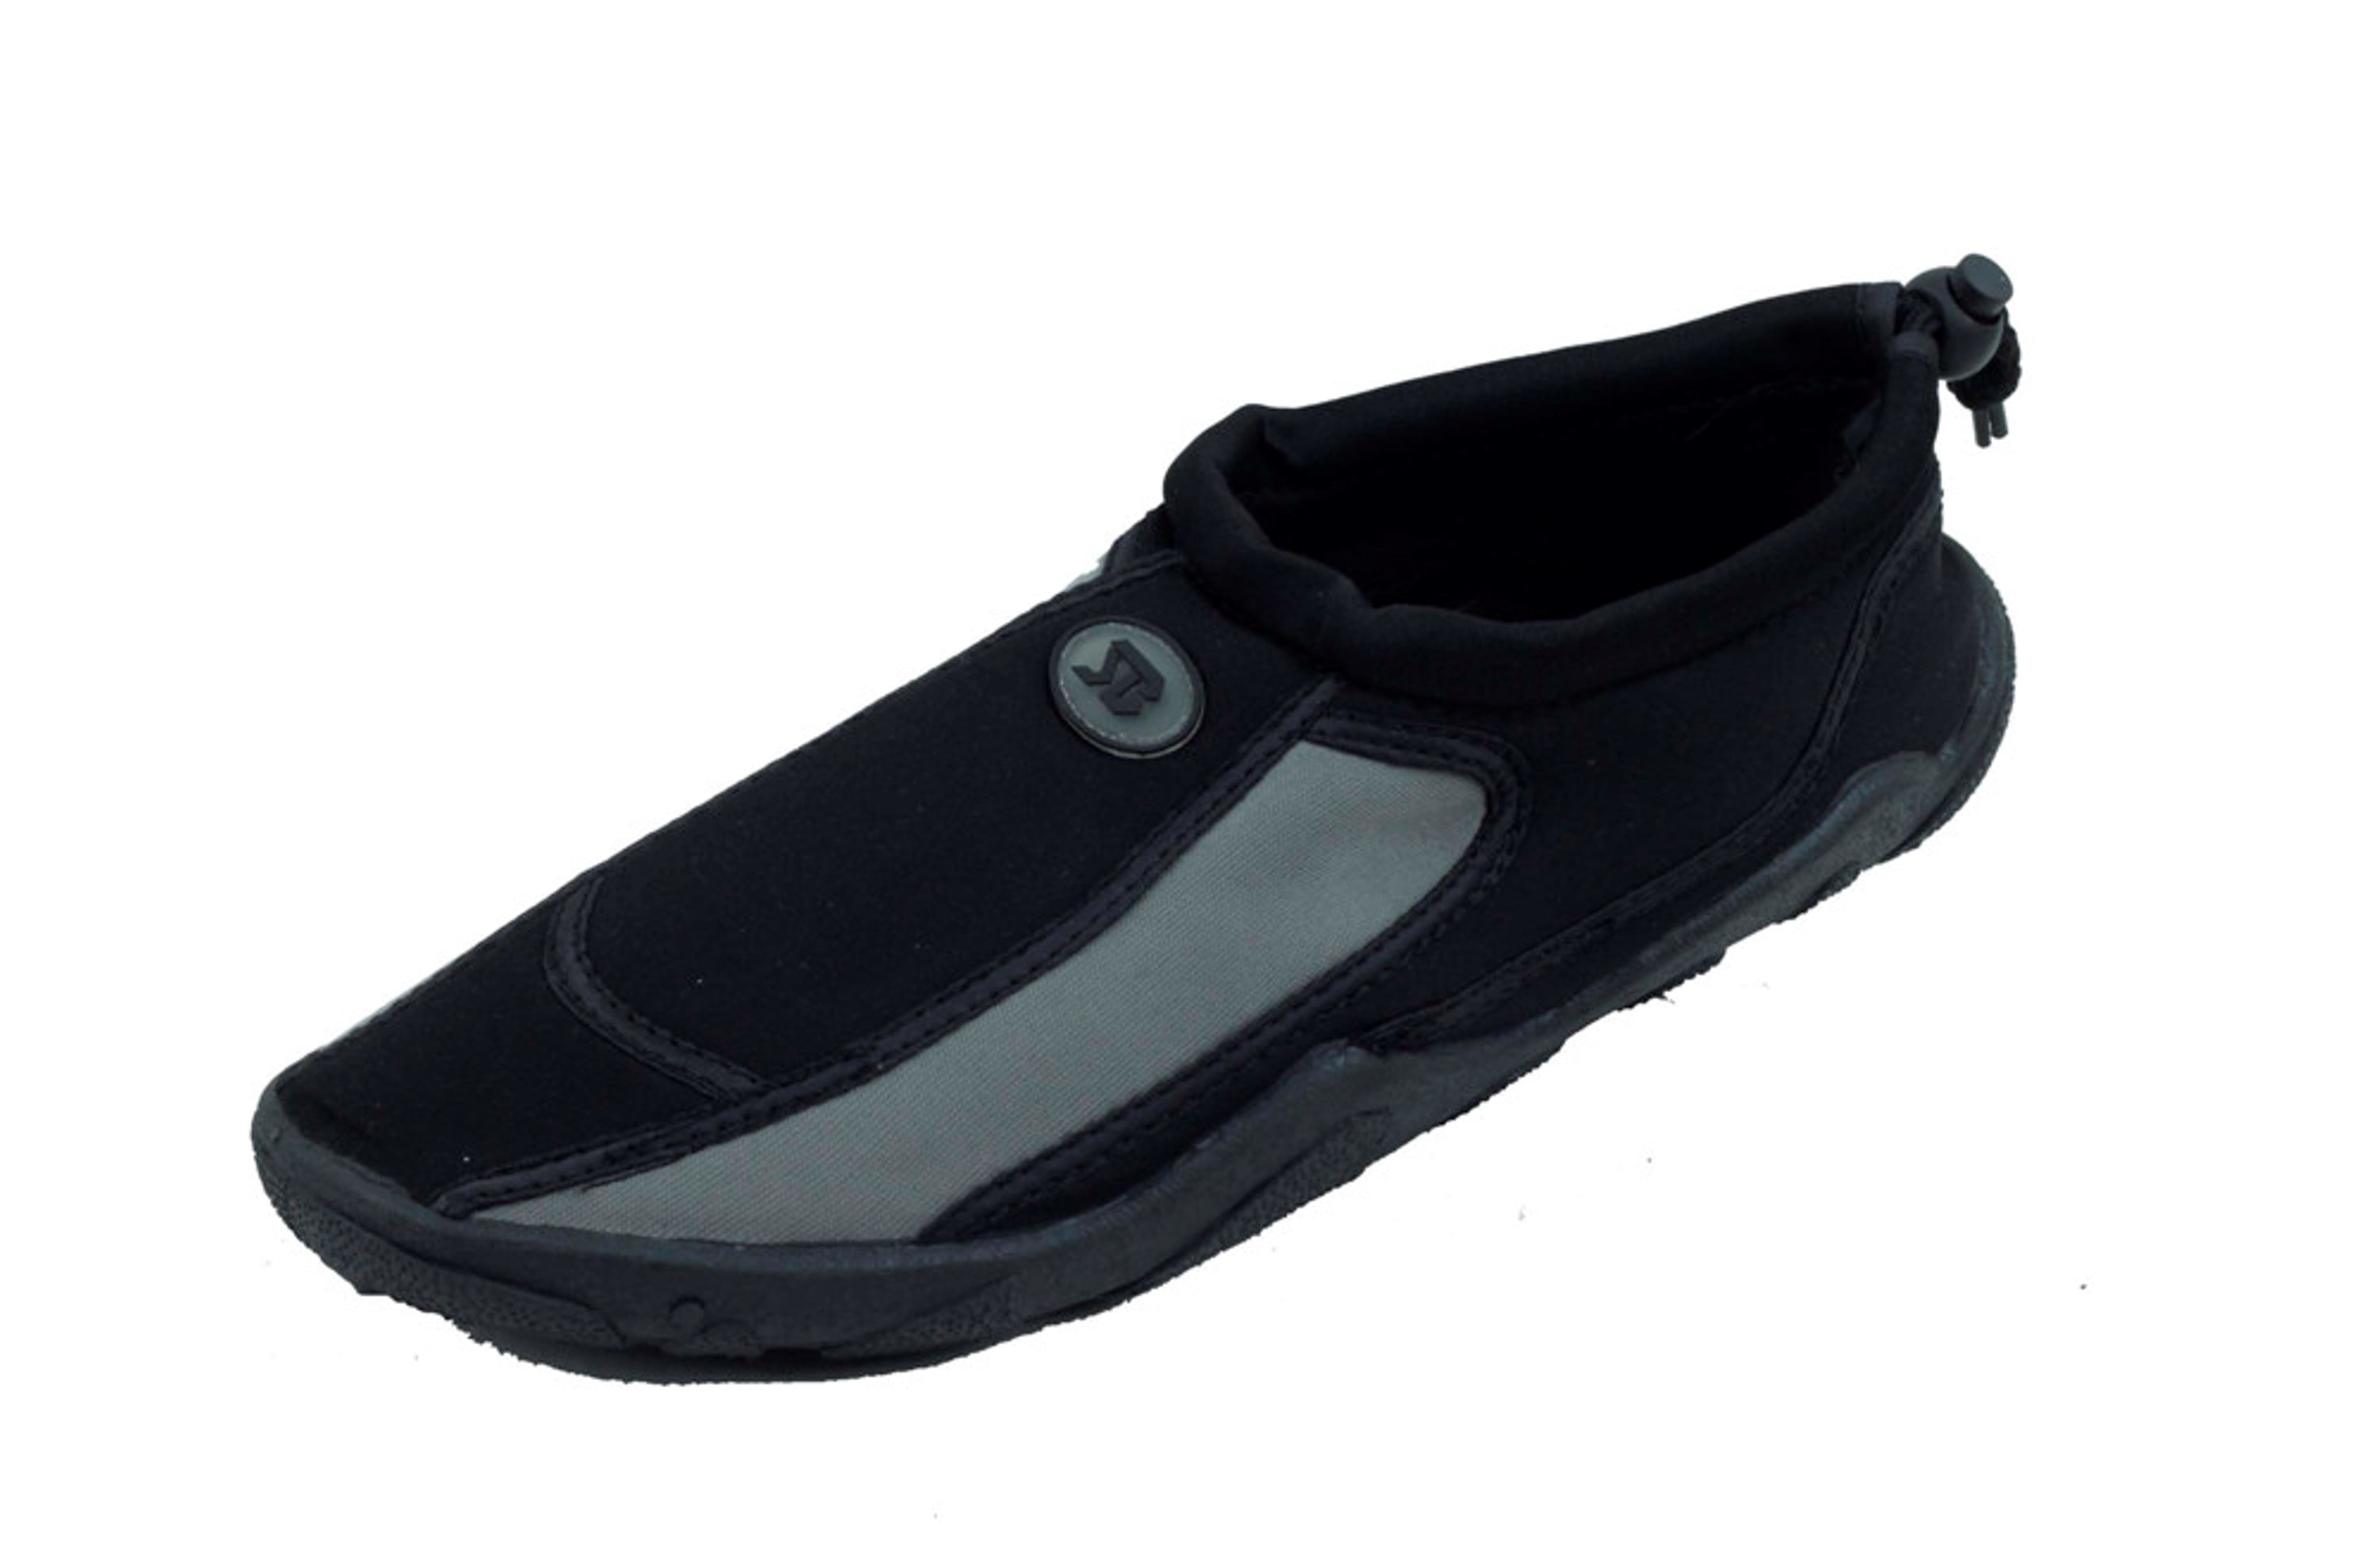 StarBay Aquatic Pool Beach Surf Adjustable Slip On Shoes Color Black Size US 10 